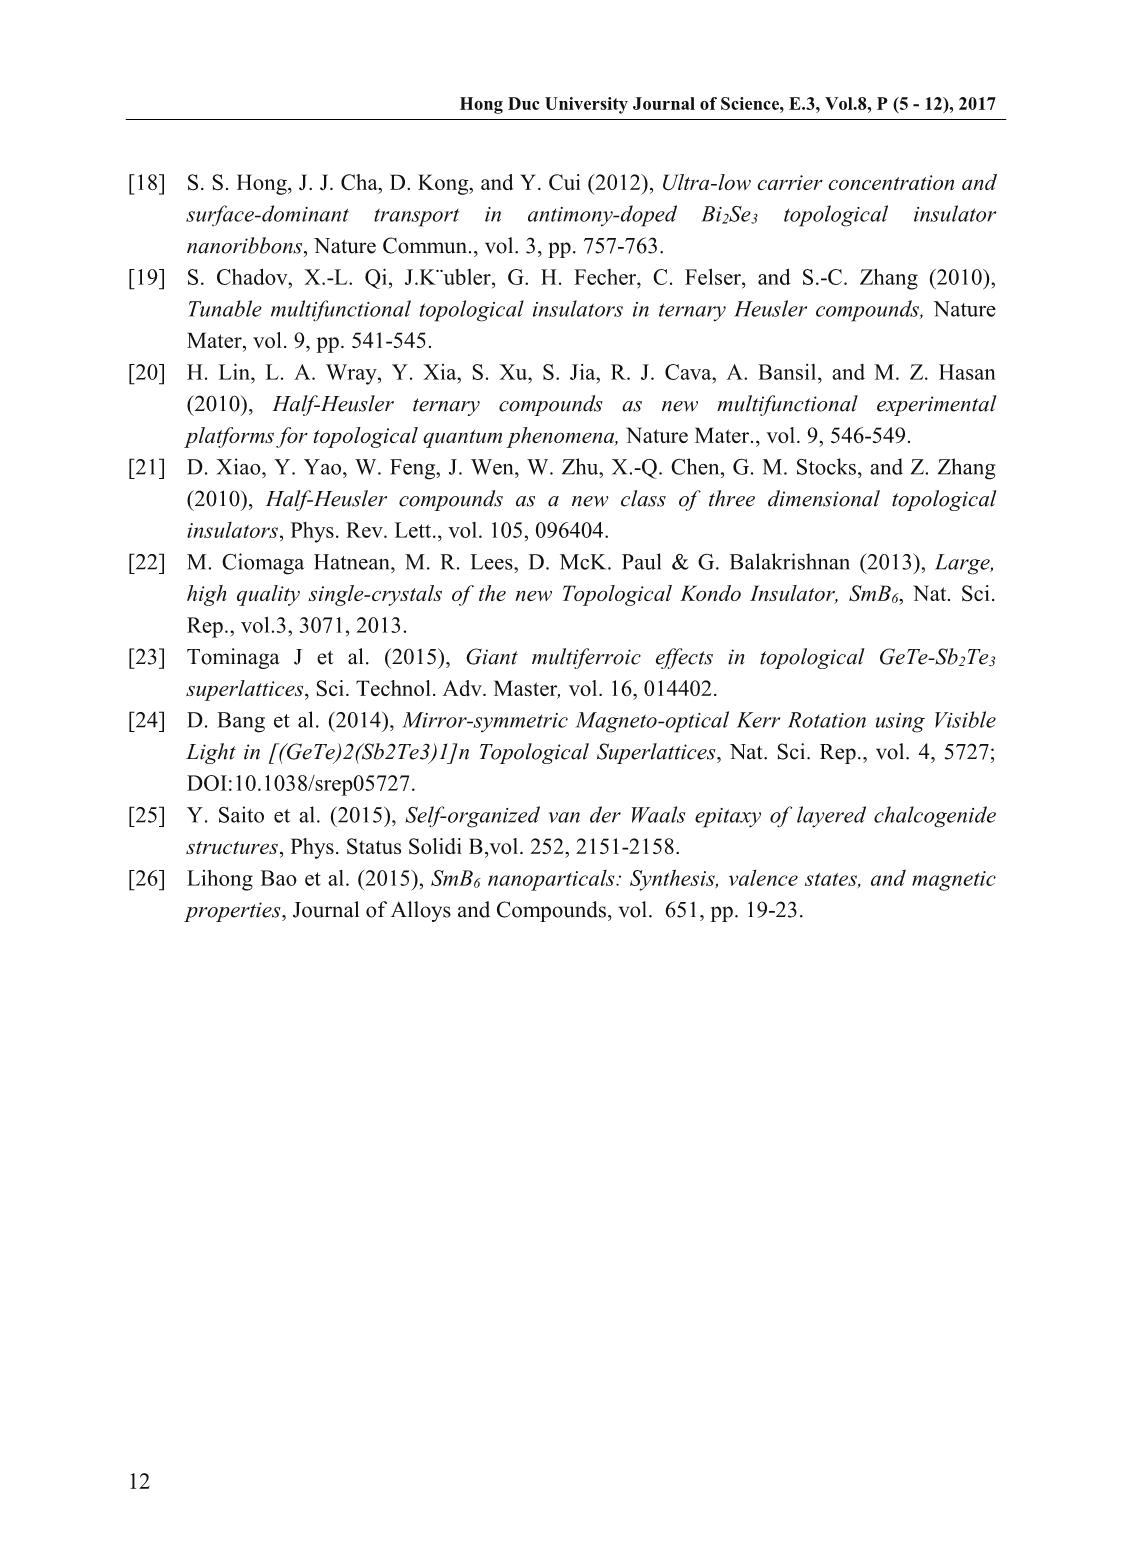 Preliminary study on gete - sbte and sm - b topological insulators trang 8